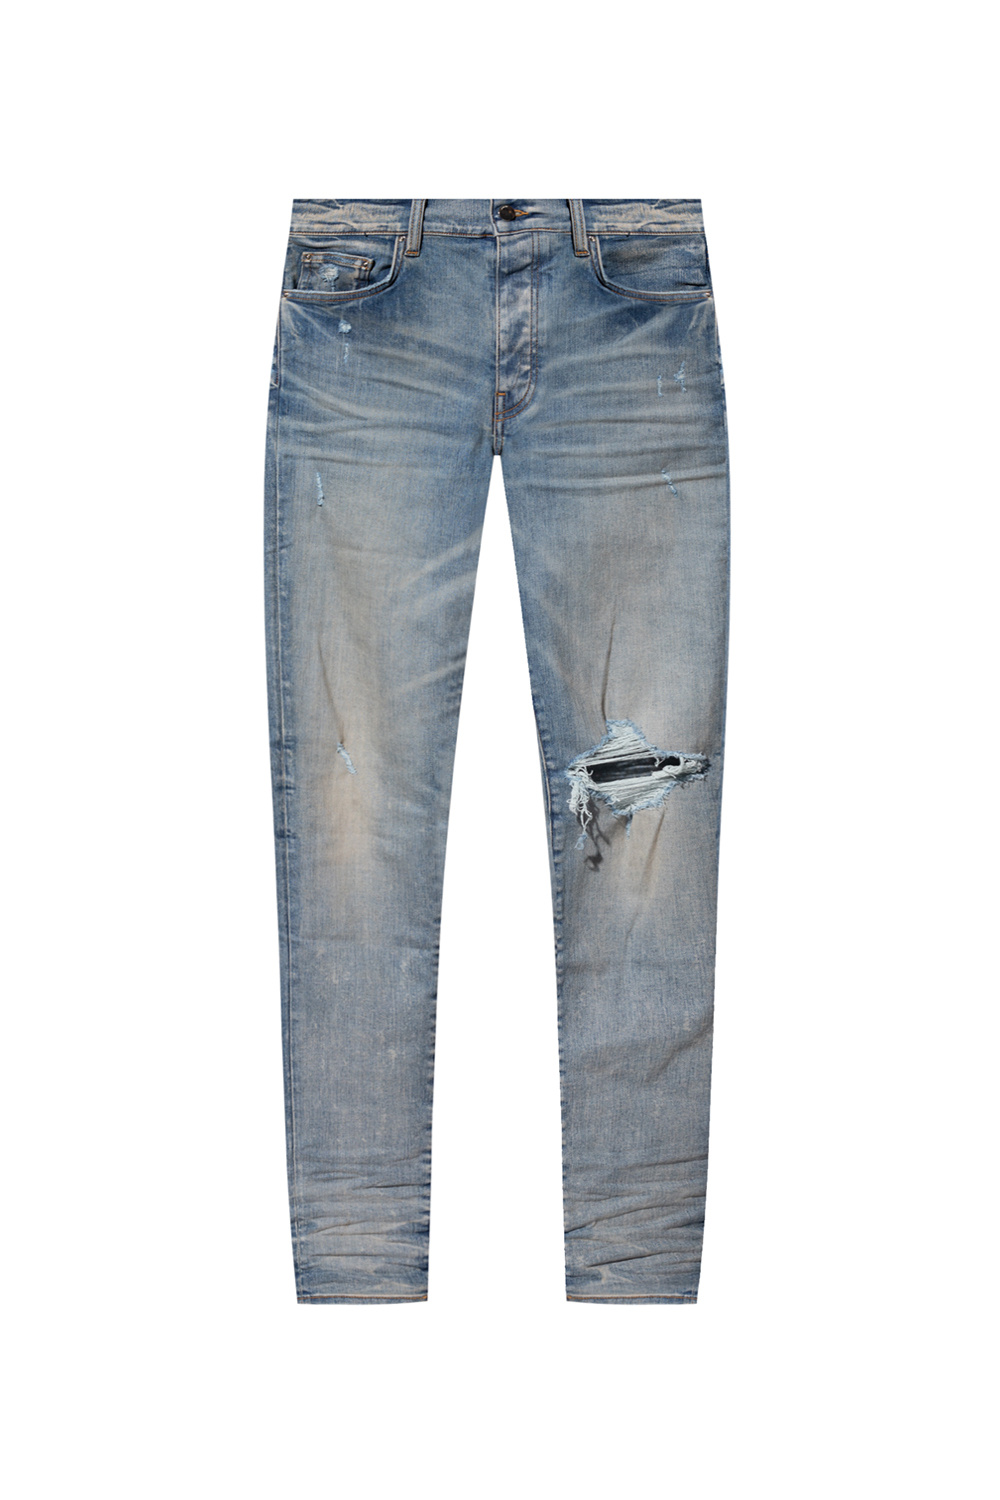 IetpShops Ecuador - Gabriele Pasini Regular-Fit & Straight Leg Pants for  Men - Jeans with vintage effect Amiri